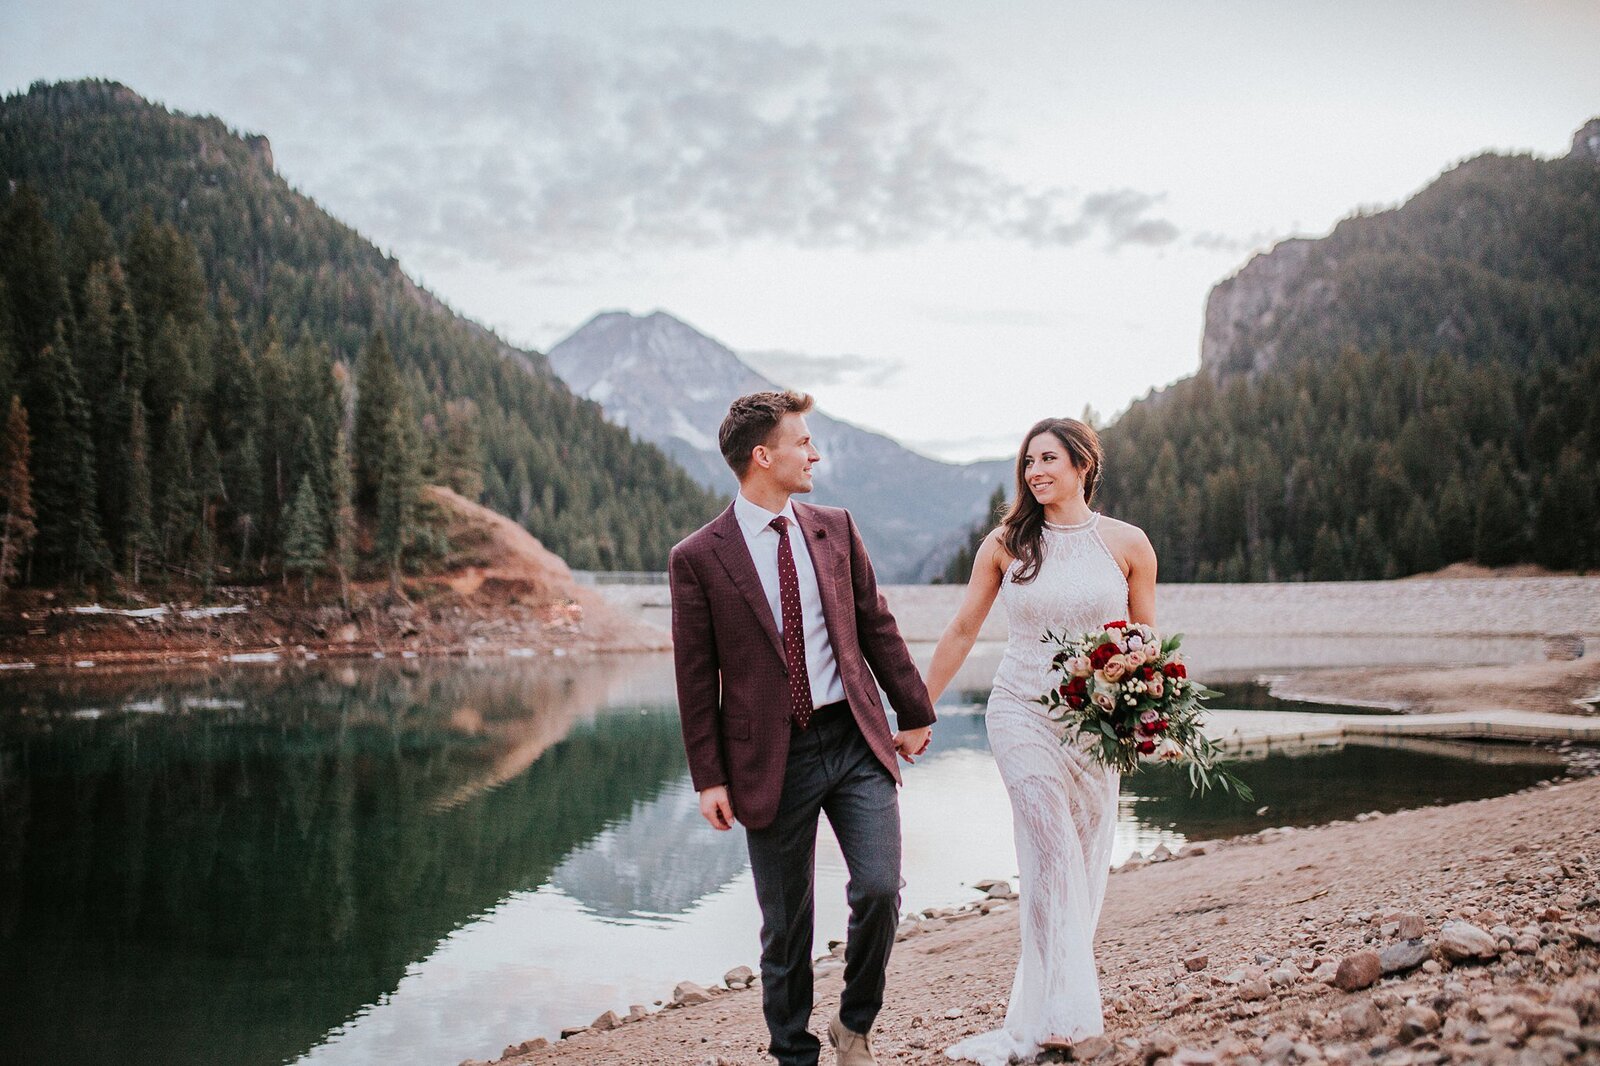 Sacramento Wedding Photographer captures bride and groom holding hands while walking lakeside